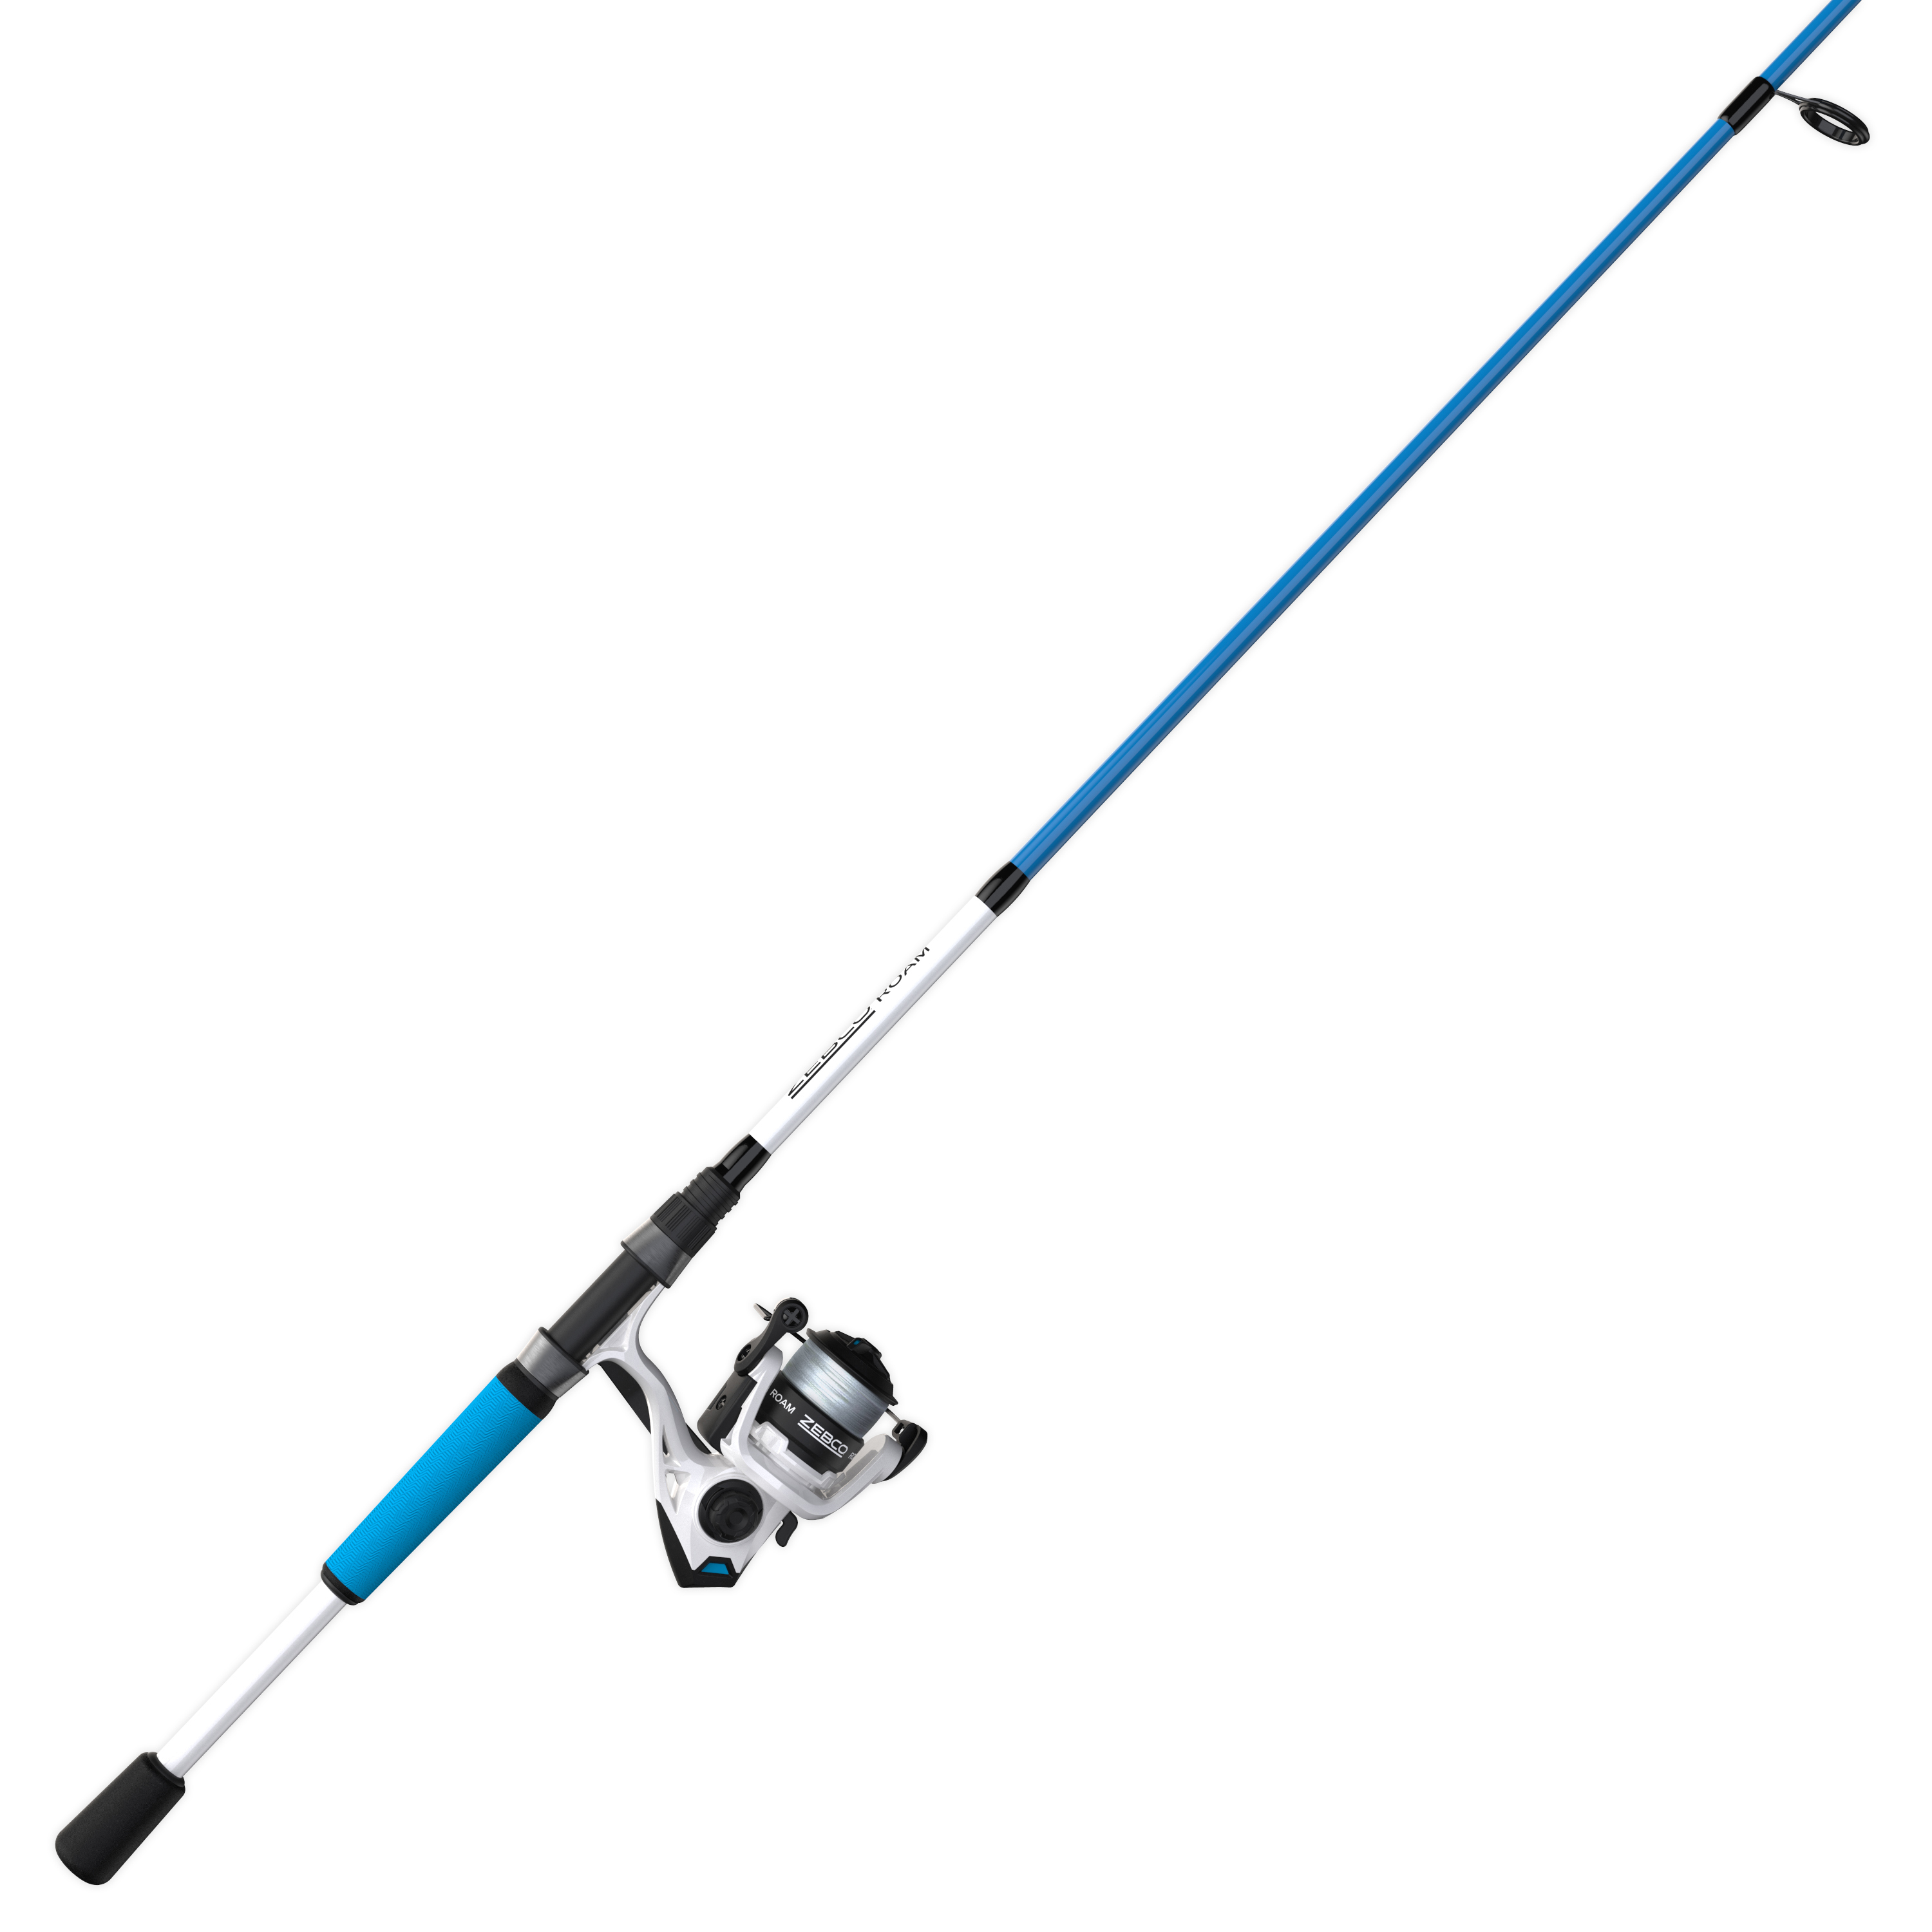 Zebco 33 Spincast Reel and Telescopic Fishing Rod Combo